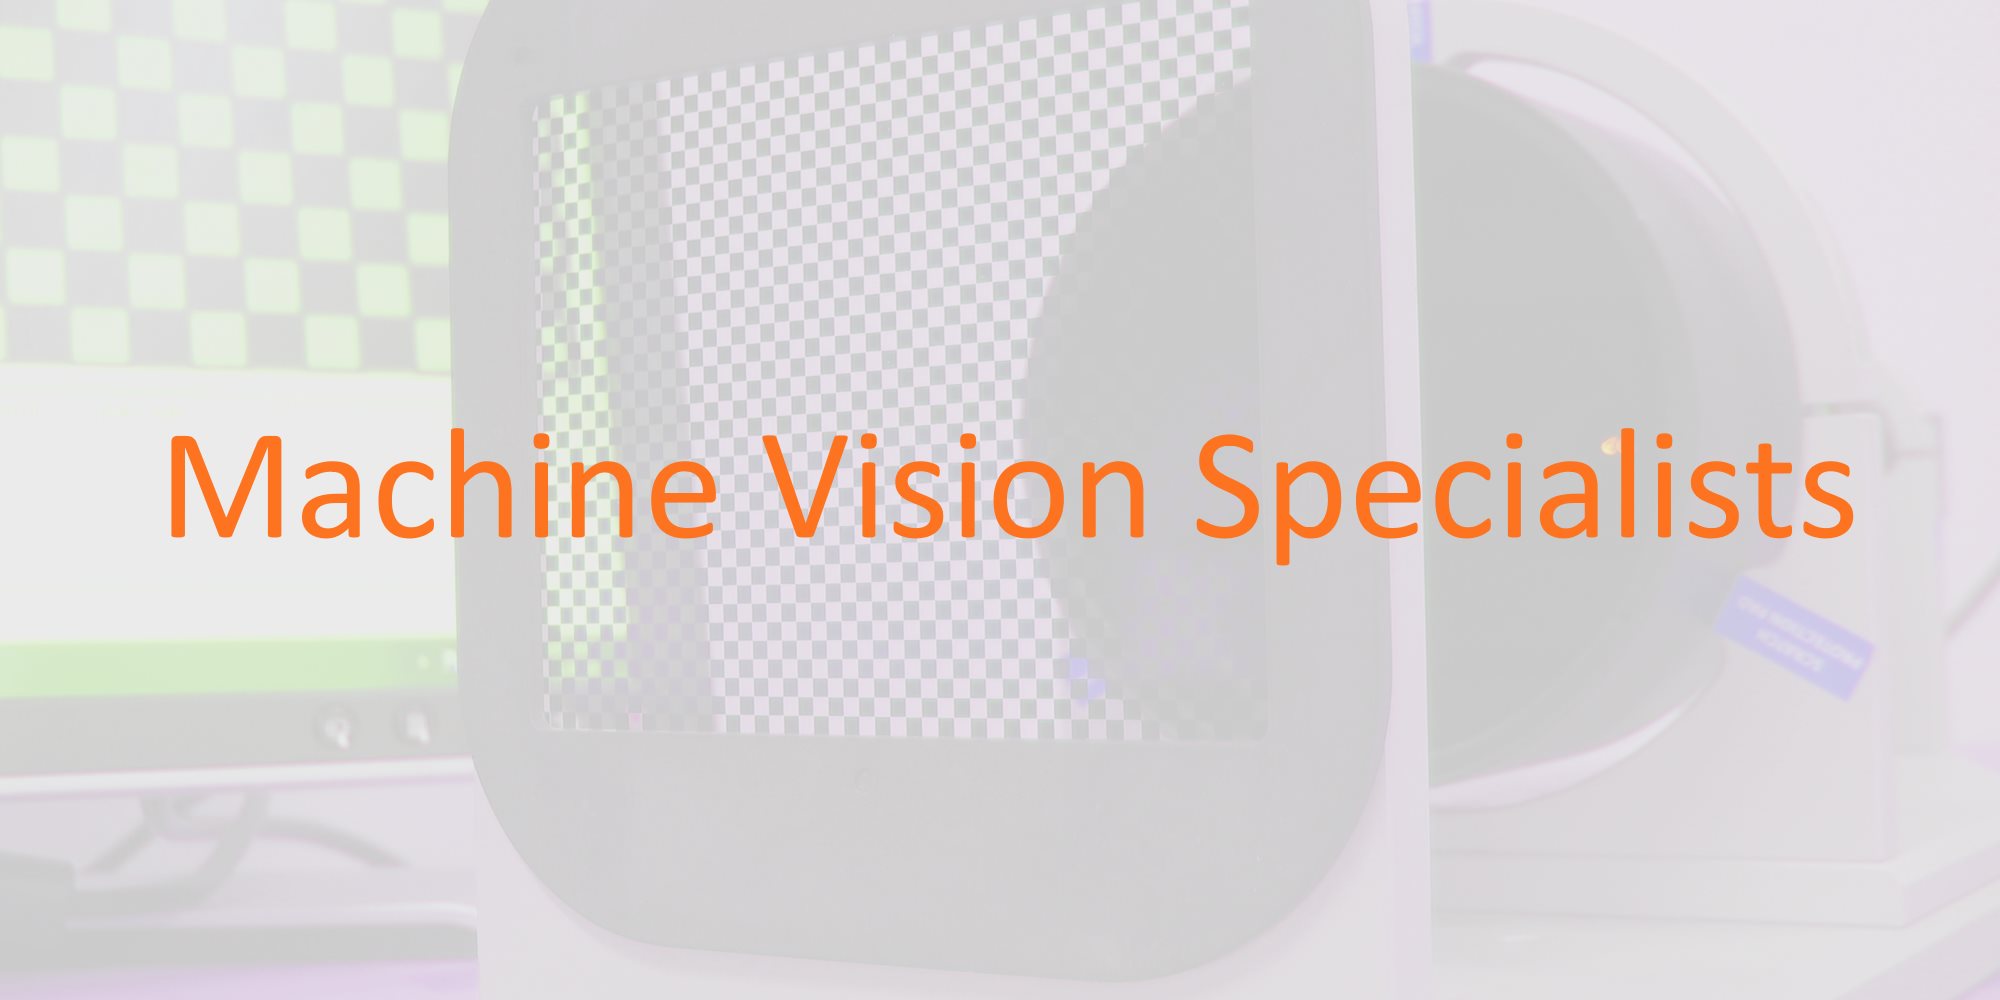 Machine vision specialists